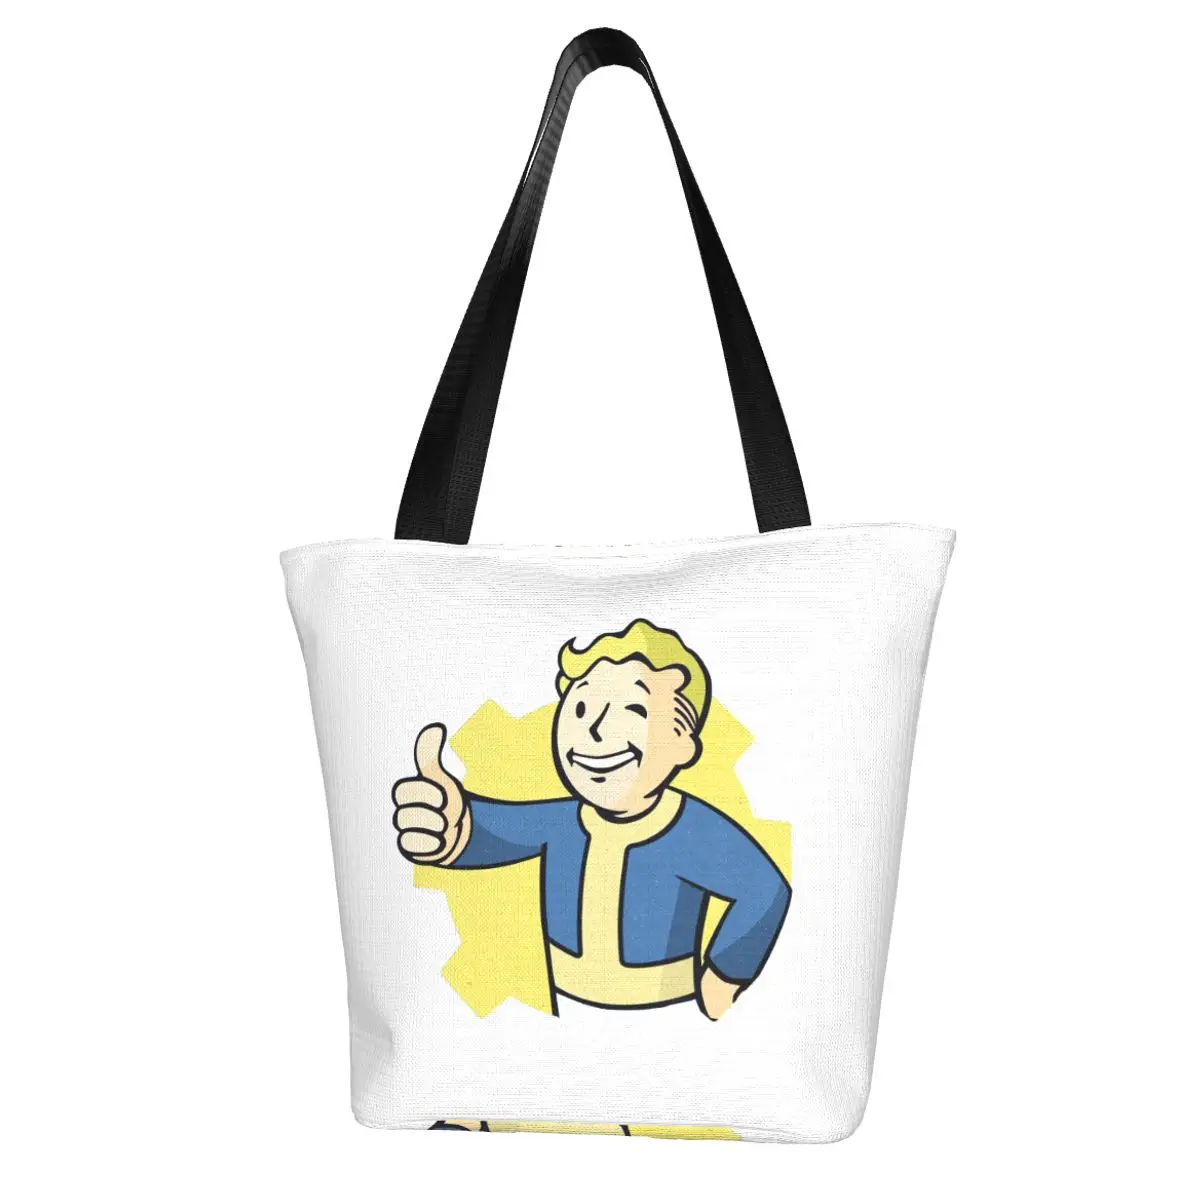 Fallout Shopping Bag Aesthetic Cloth Outdoor Handbag Female Fashion Bags